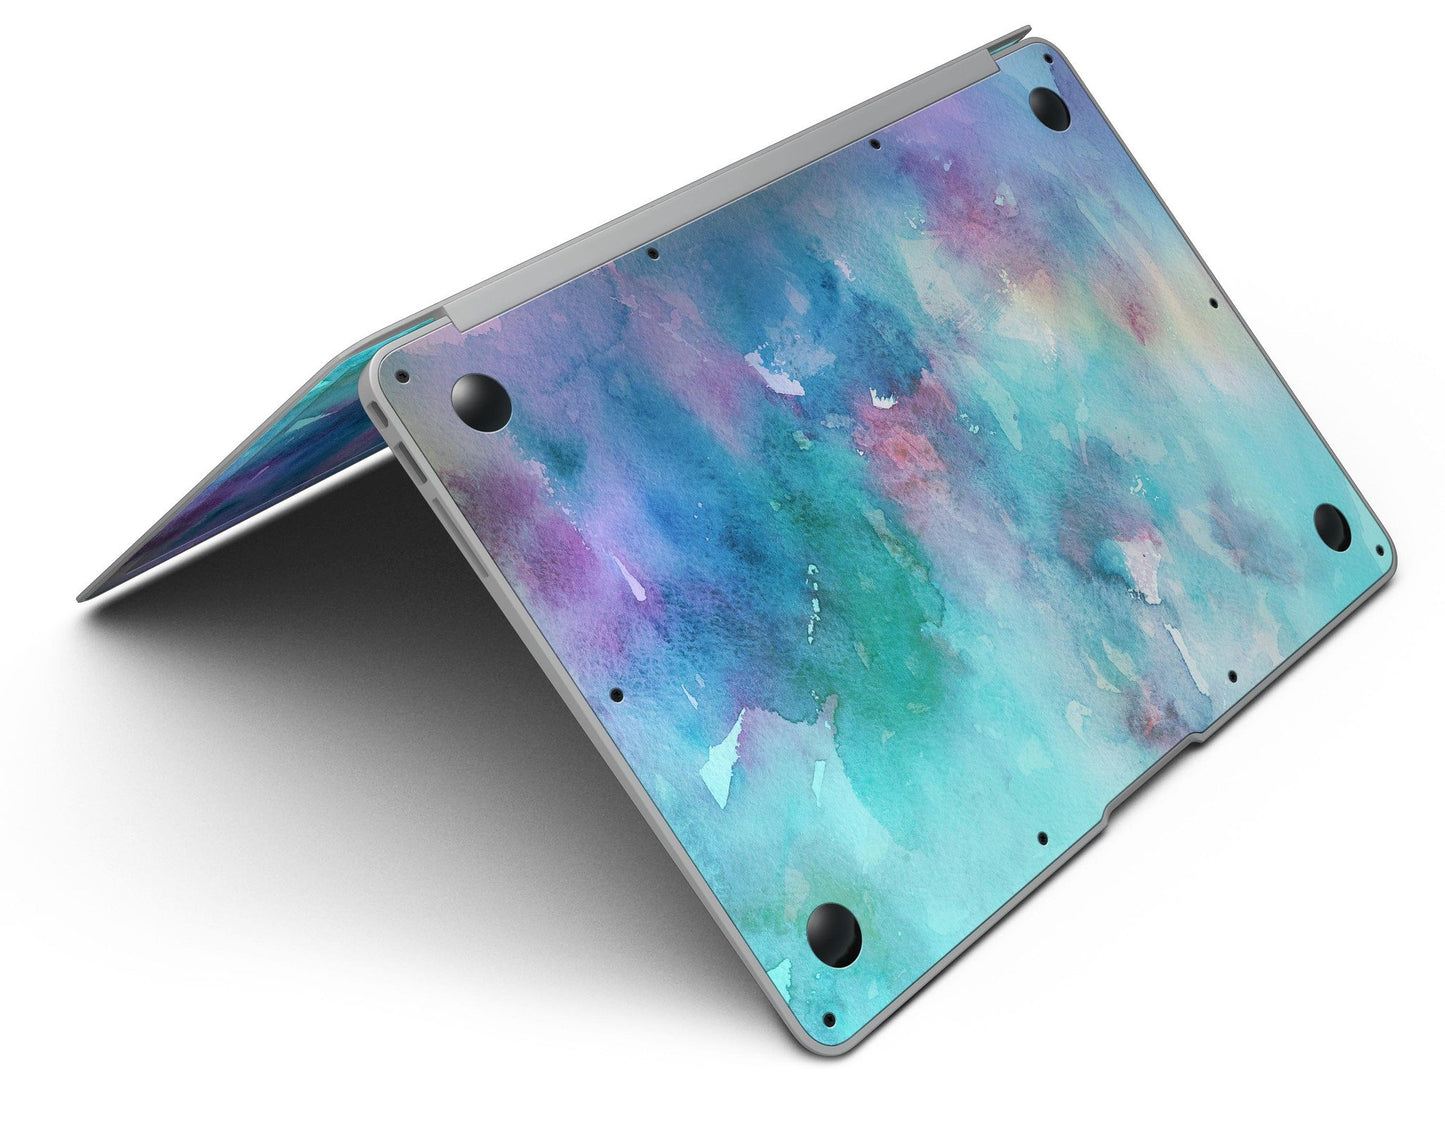 Bright Absorbed Watercolor Texture - MacBook Air Skin Kit